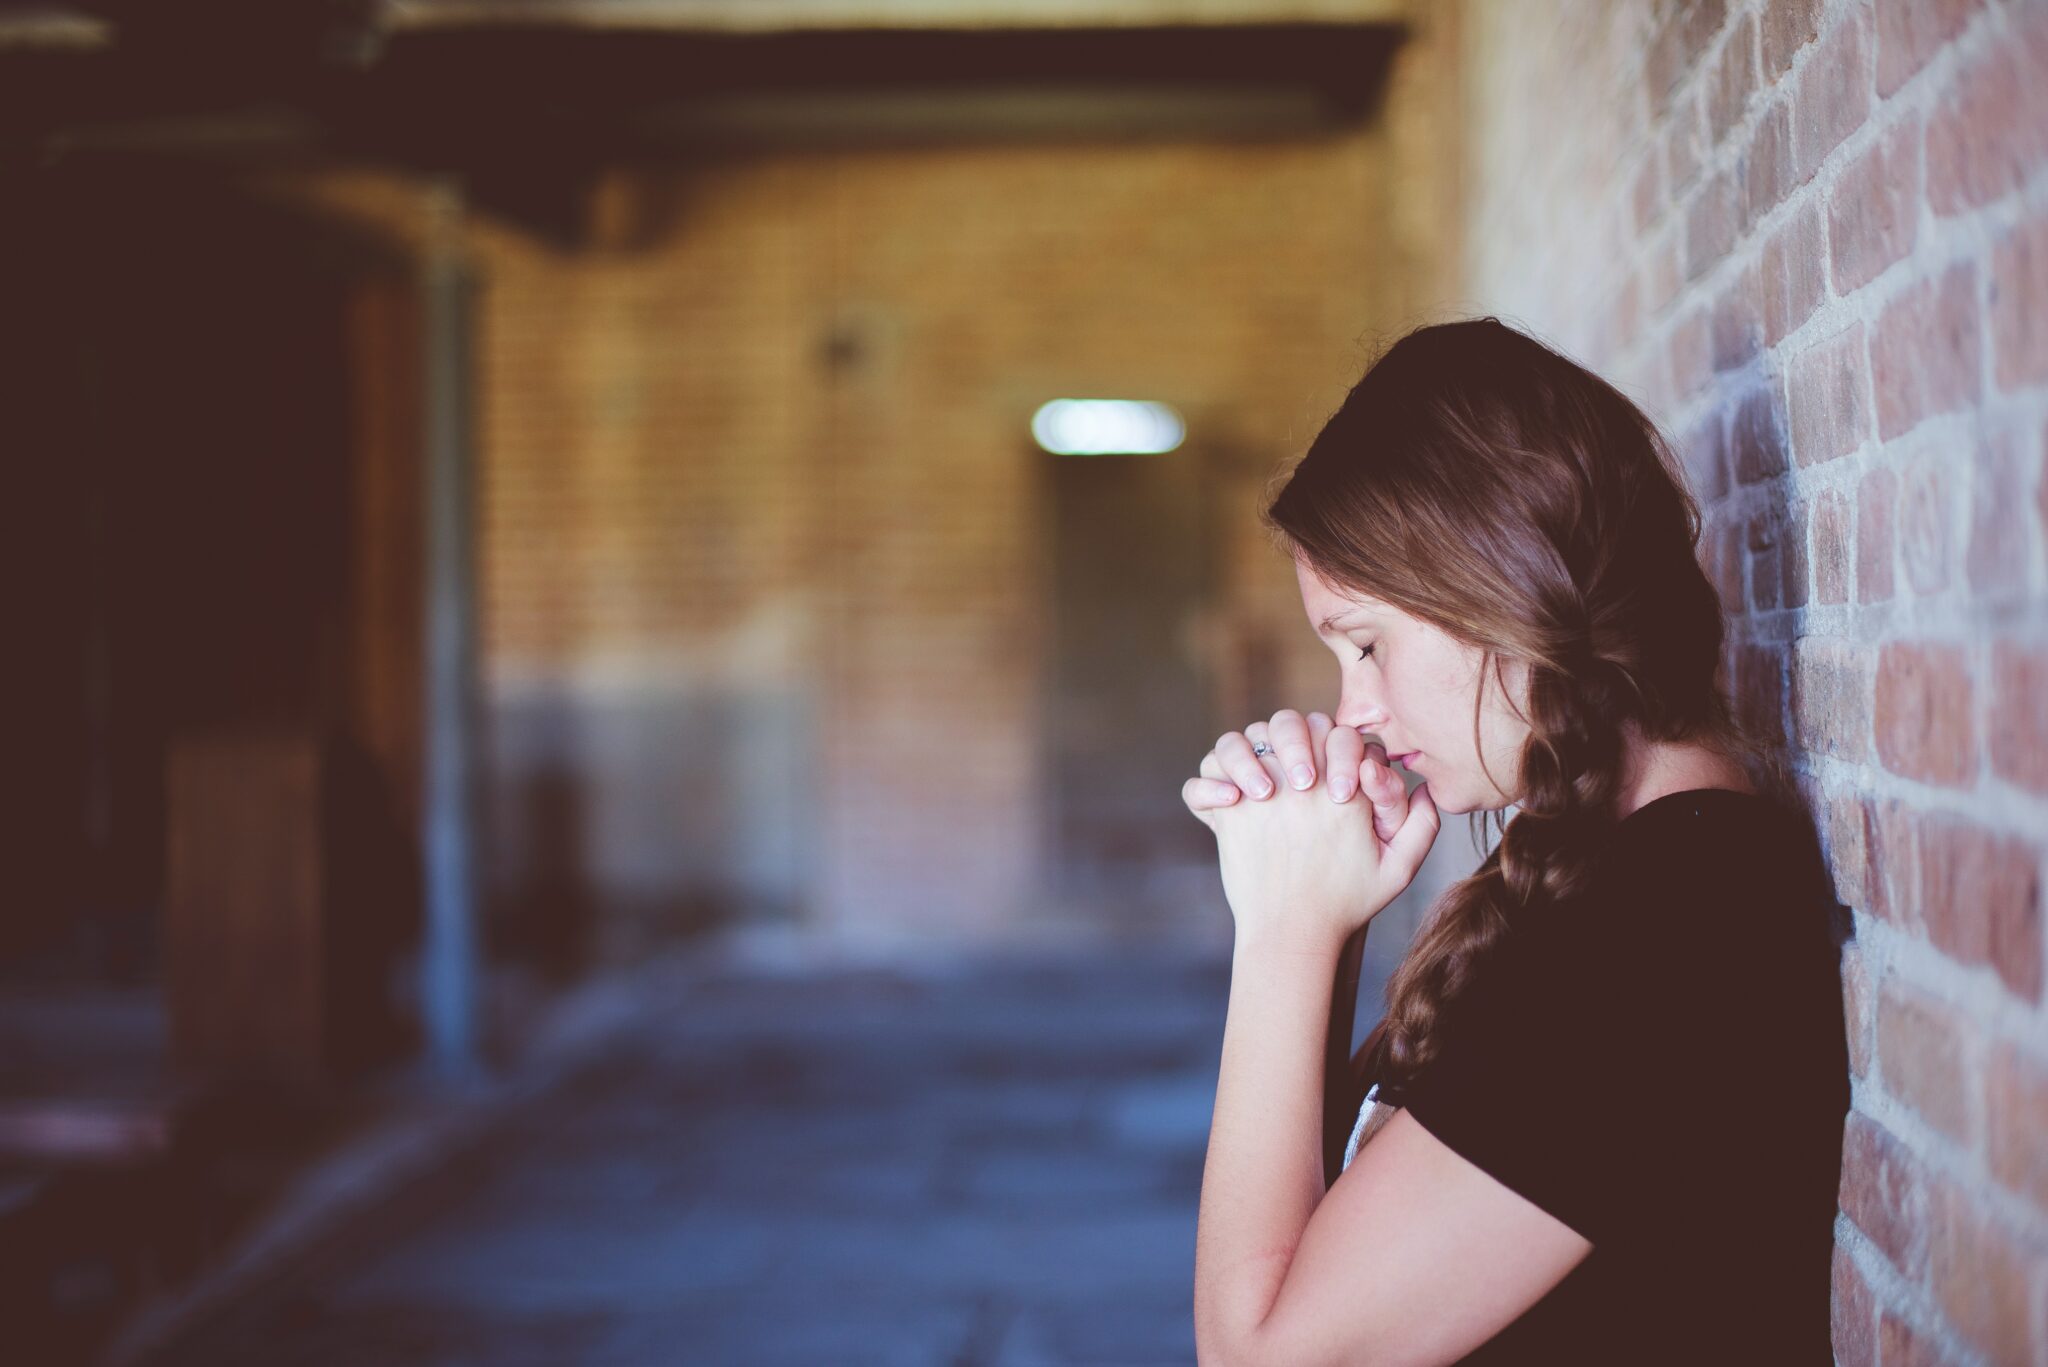 Why Centering Prayer? Biblical Grounding for Finding Rest in God